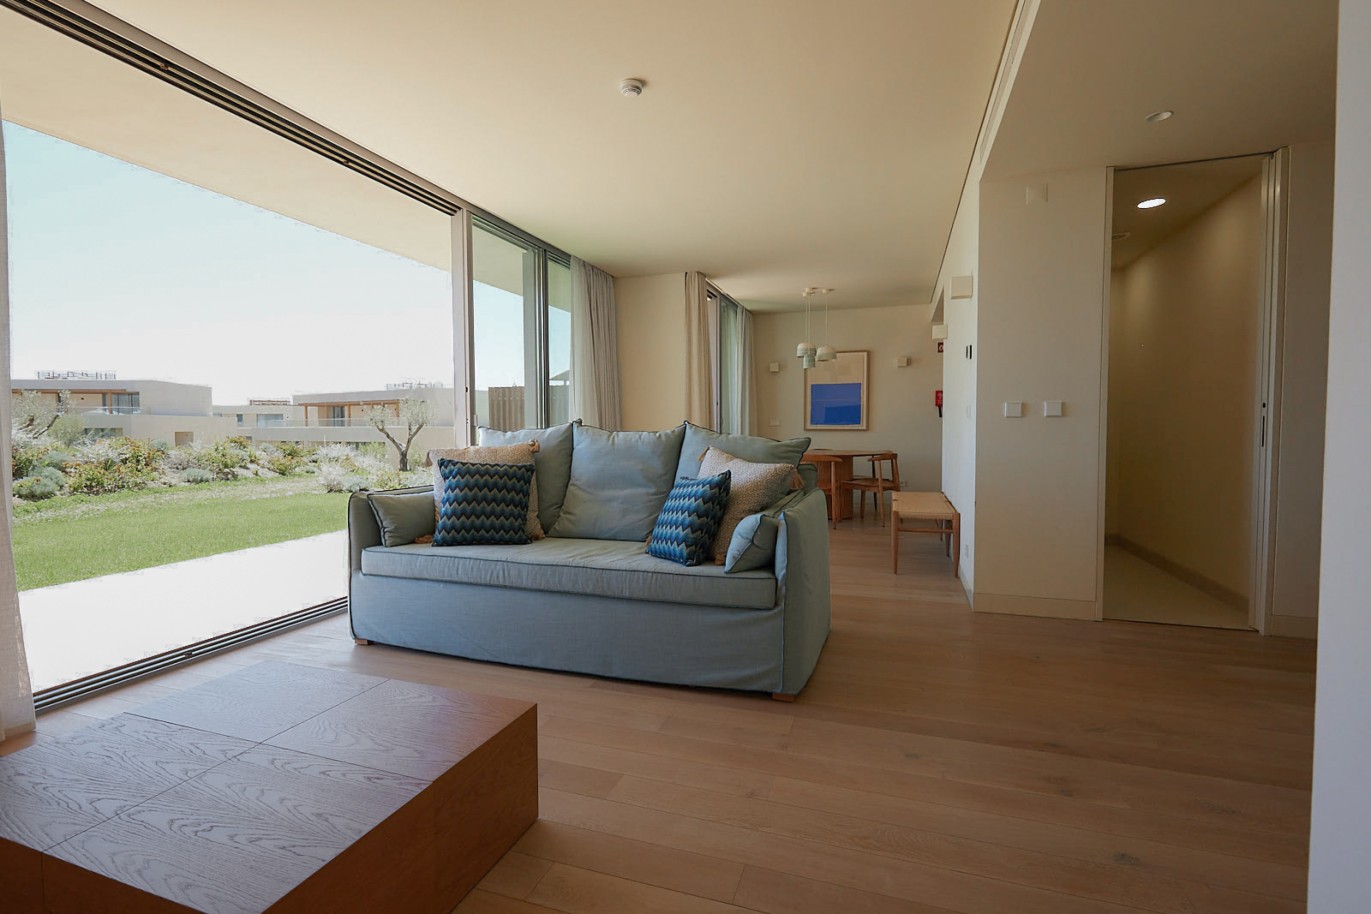 2 bedroom apartment in resort, for sale in Porches, Algarve_228830